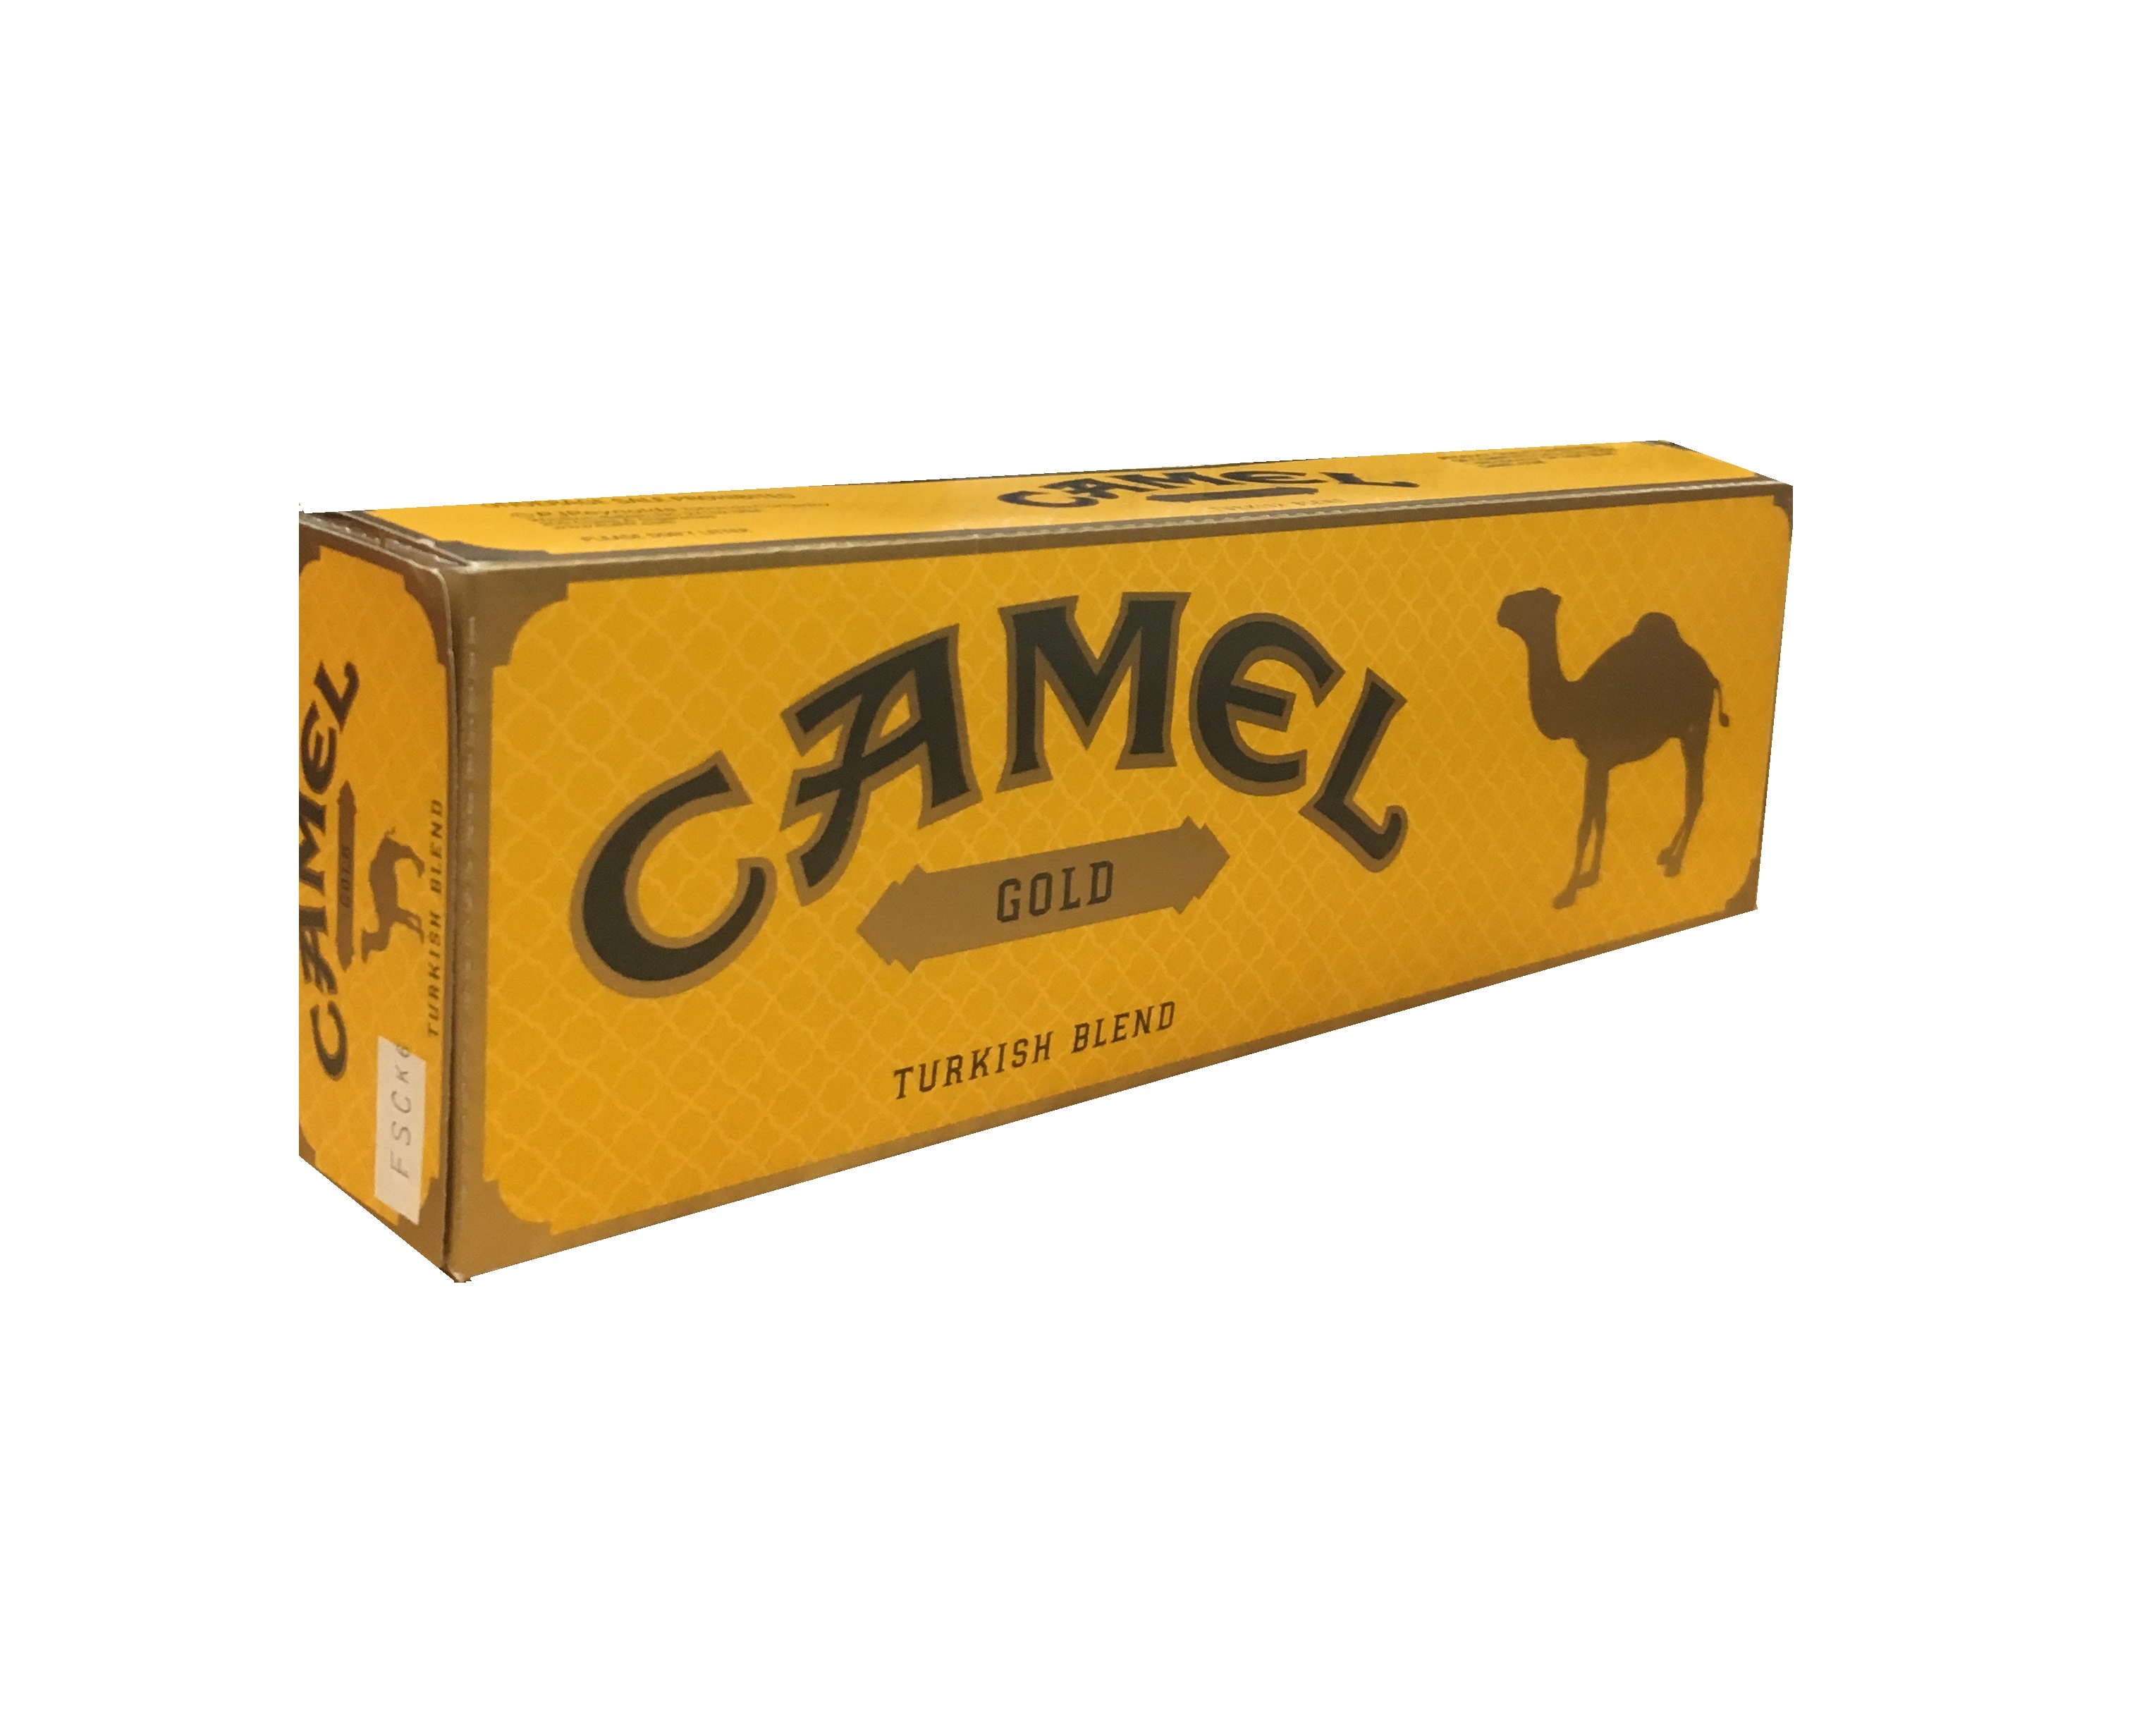 Camel turkish blend gold box